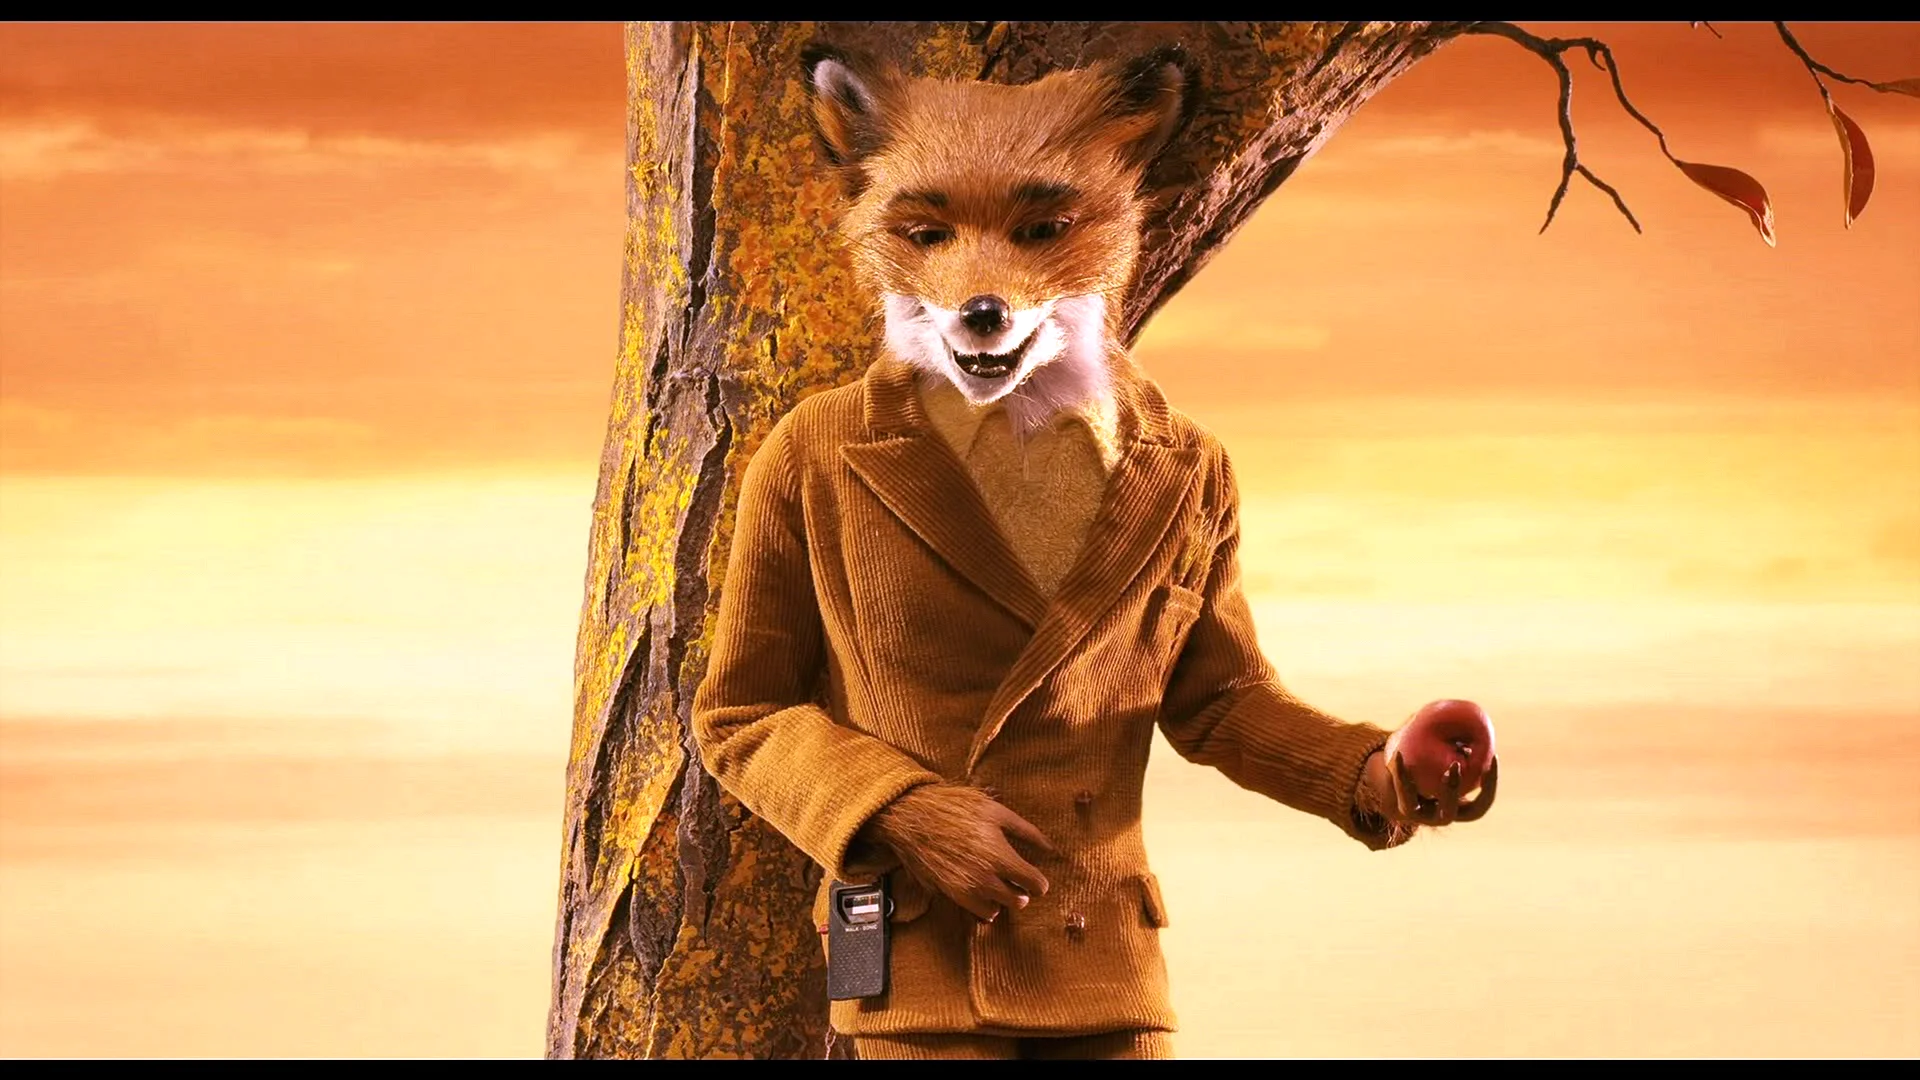 Mister fox. Бесподобный Мистер Фокс. Уэс Андерсон бесподобный Мистер Фокс. Бесподобный Мистер ФОК. Бесподобный Мистер Фокс / fantastic Mr. Fox.